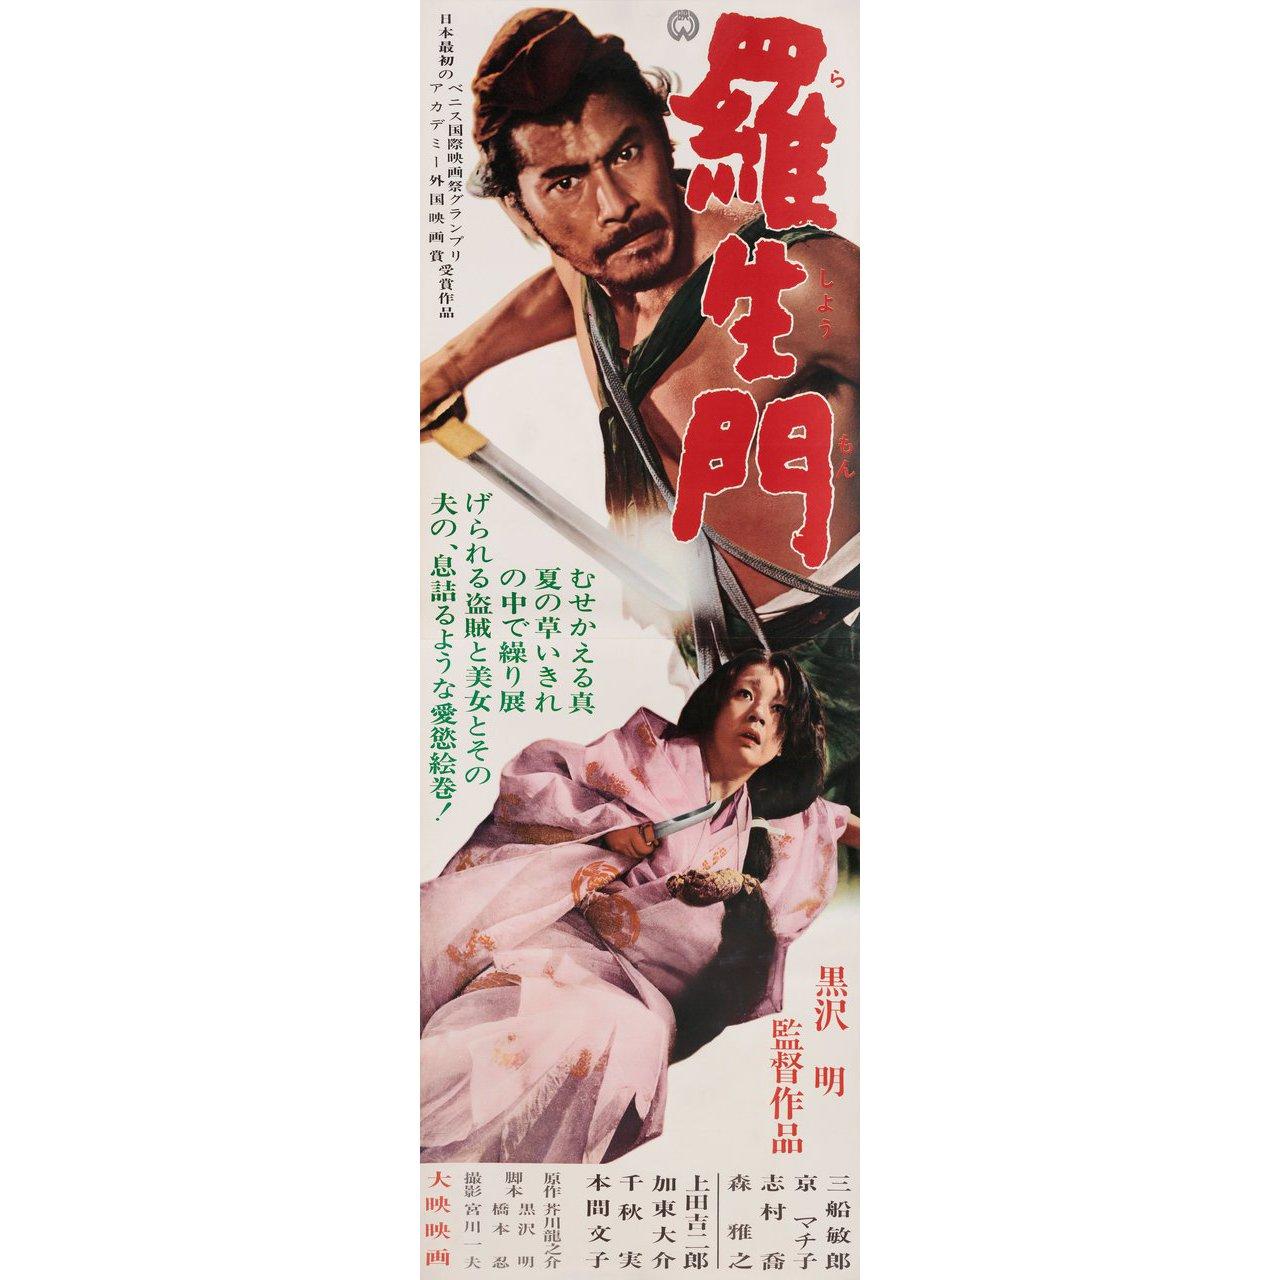 Original 1965 re-release Japanese STB tatekan poster for the 1950 film Rashomon directed by Akira Kurosawa with Toshiro Mifune / Machiko Kyo / Masayuki Mori / Takashi Shimura. Fine condition, linen-backed. This poster has been professionally